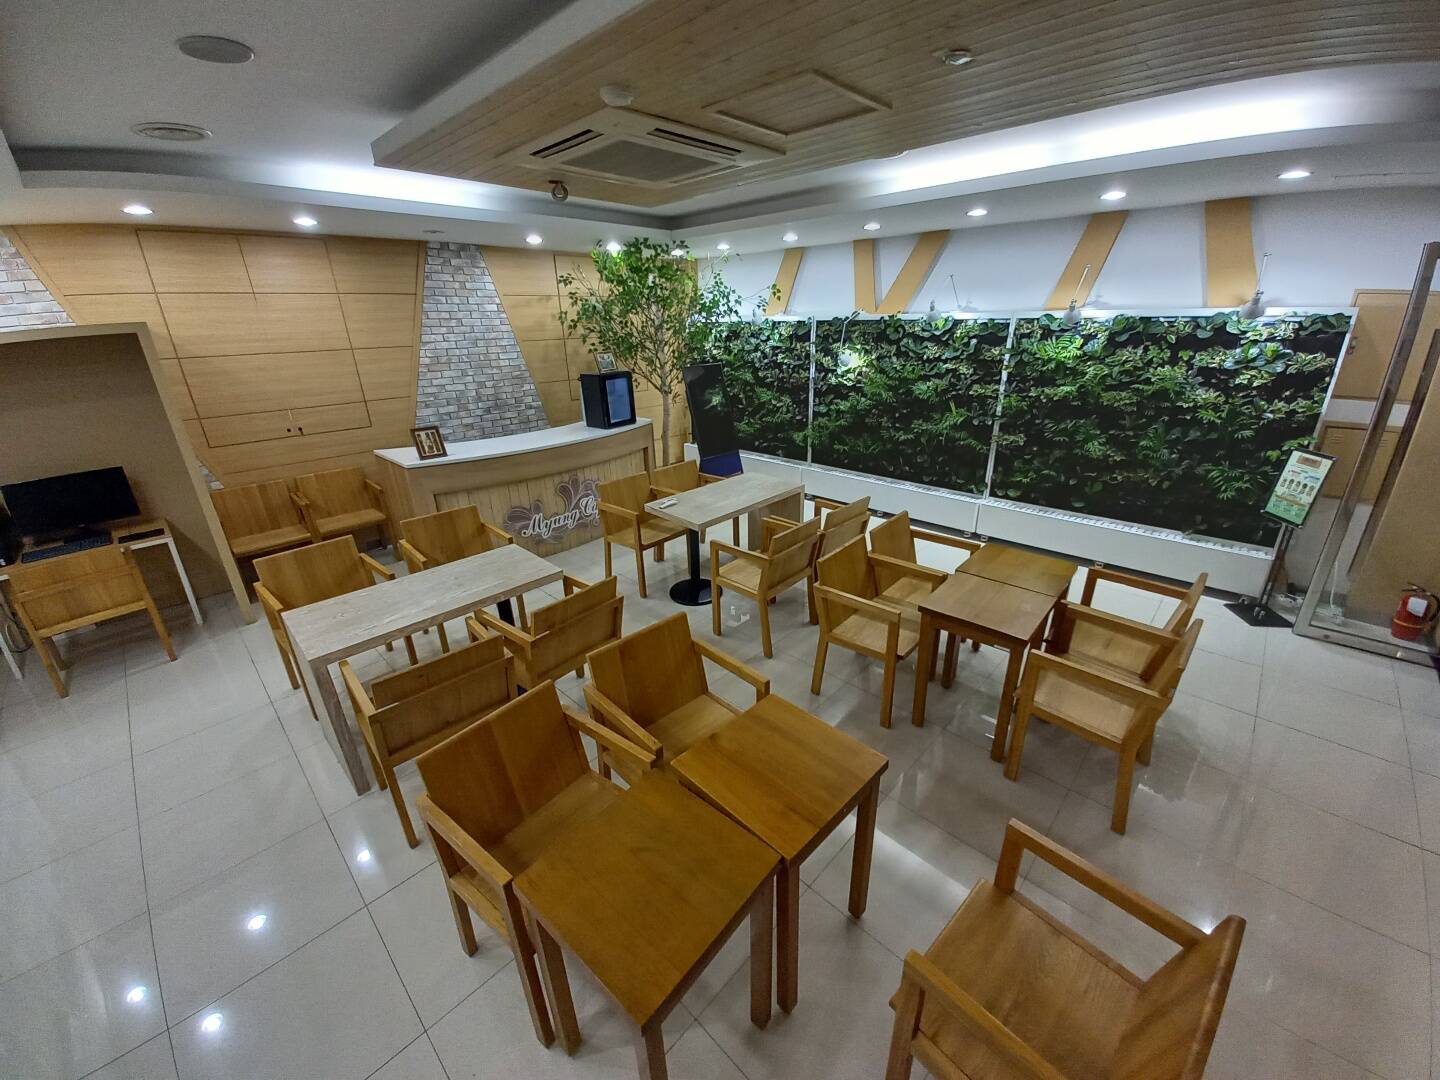 Myung Infotech's HDD Museum & Cafe